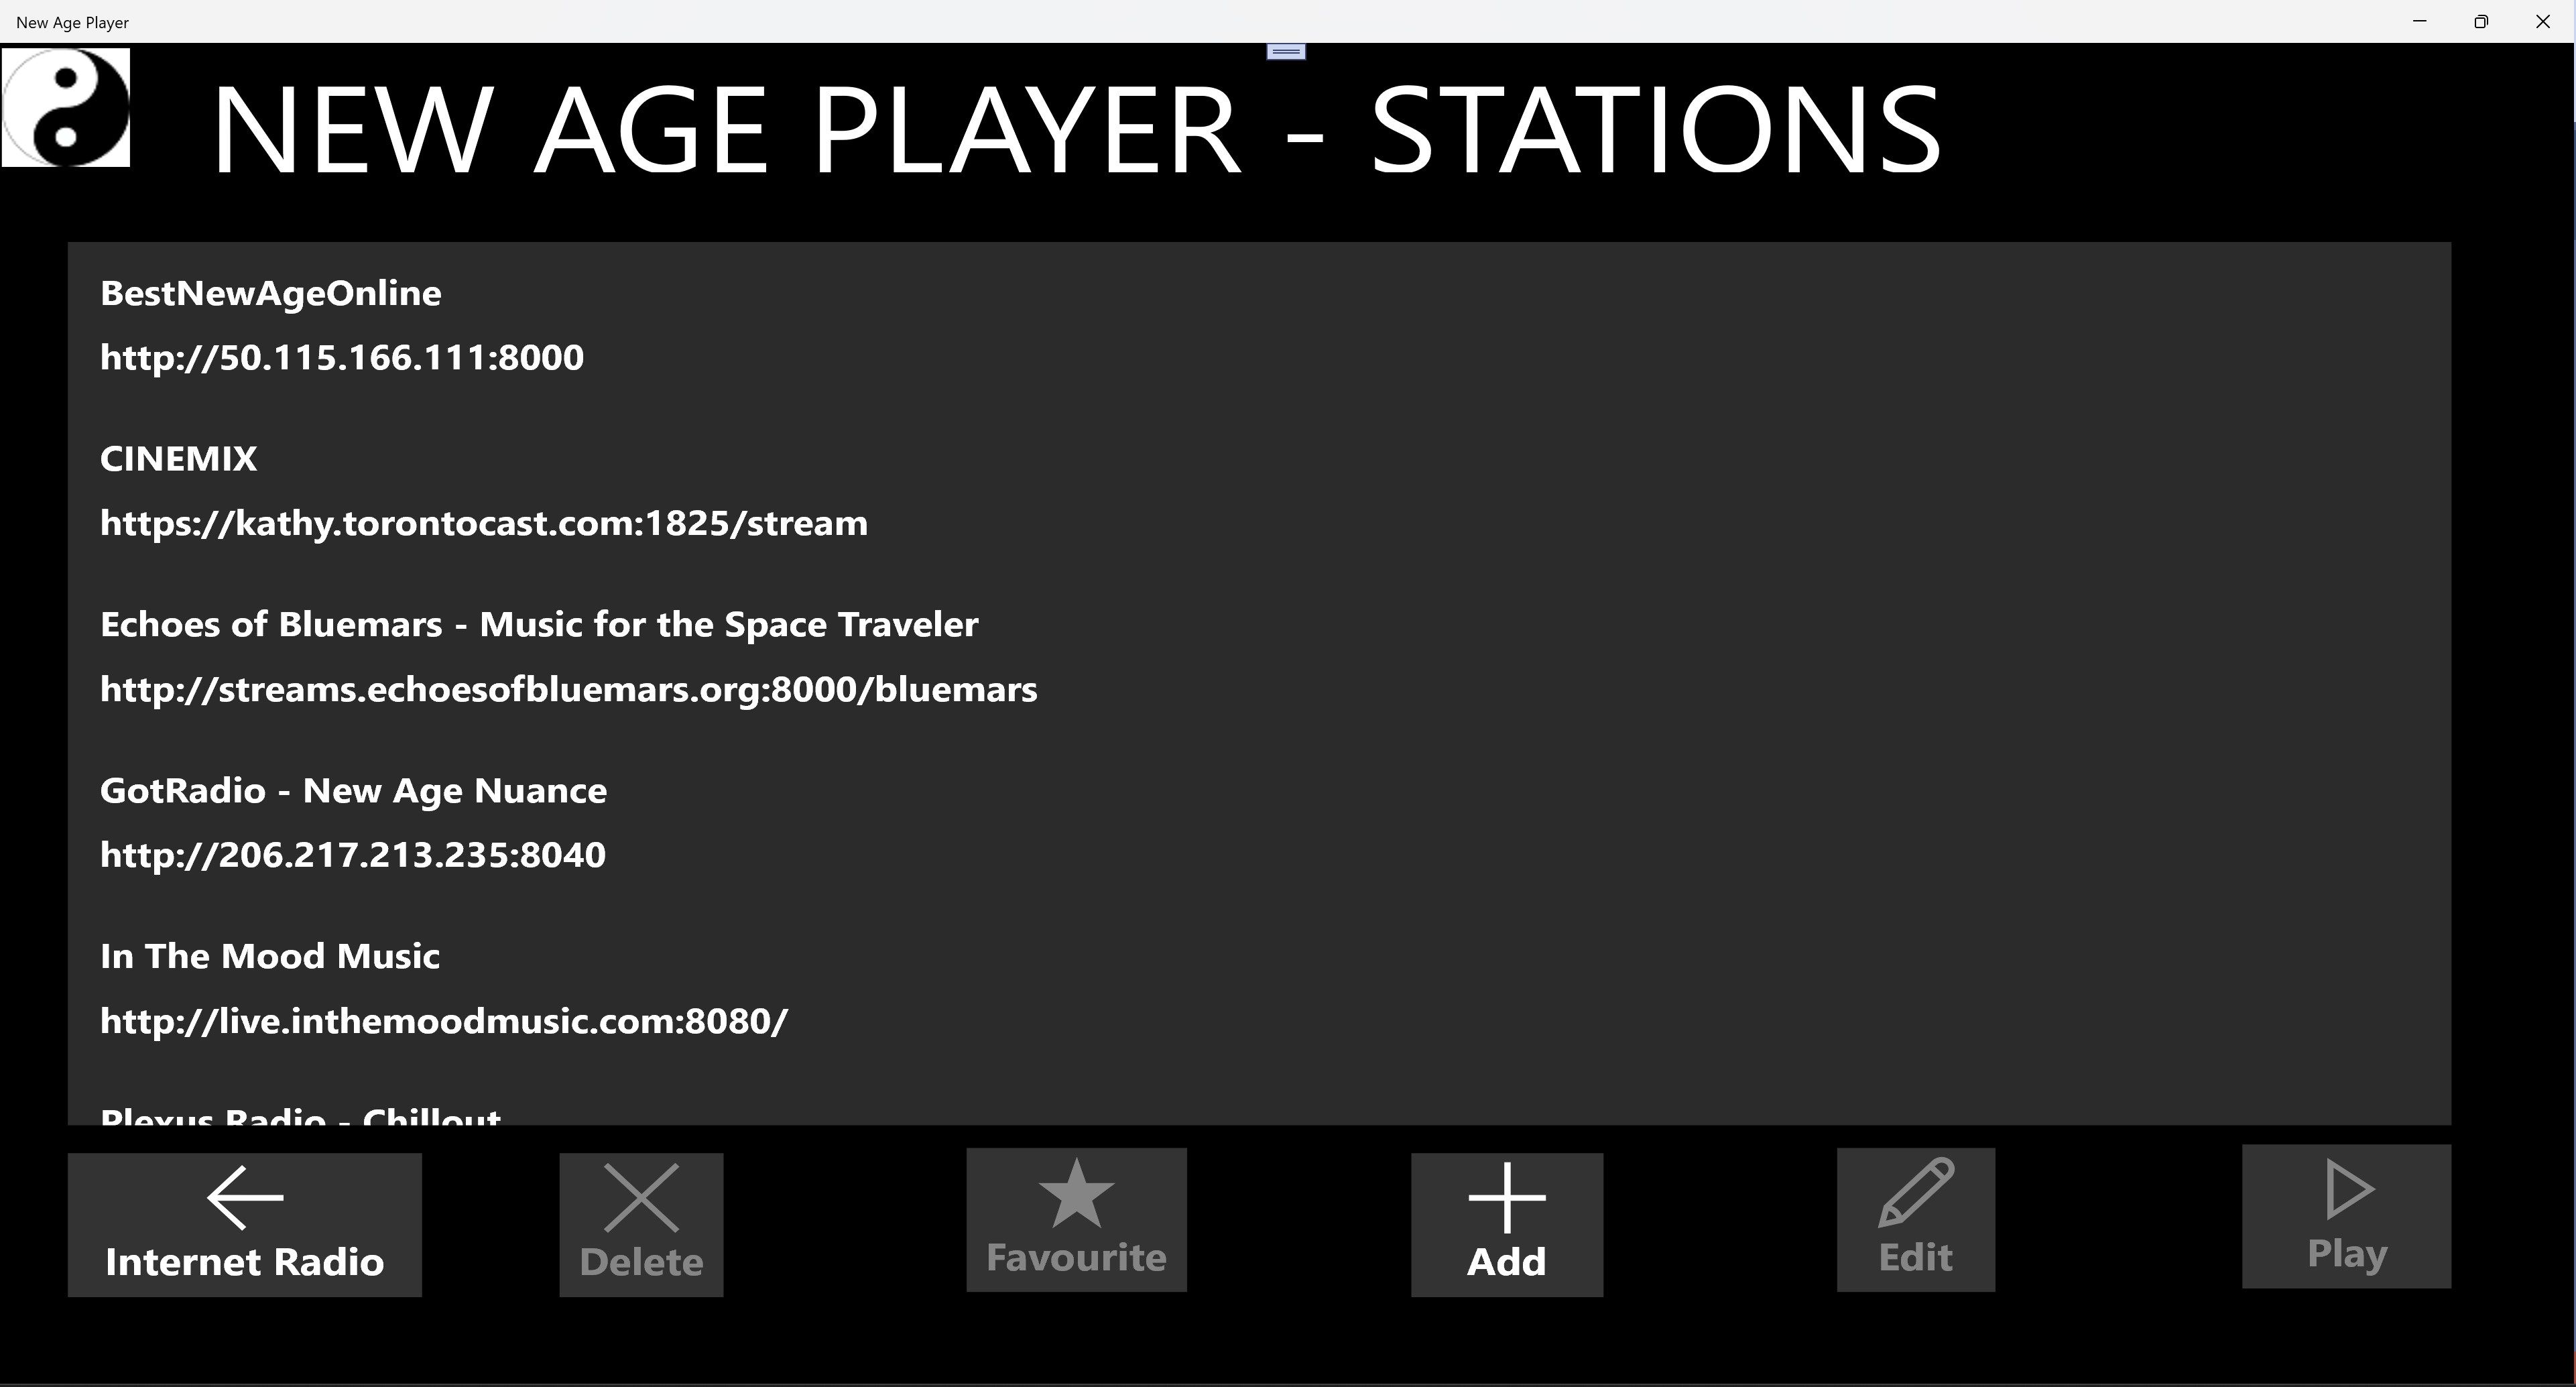 Stations screen (windows 10) - Dark Theme